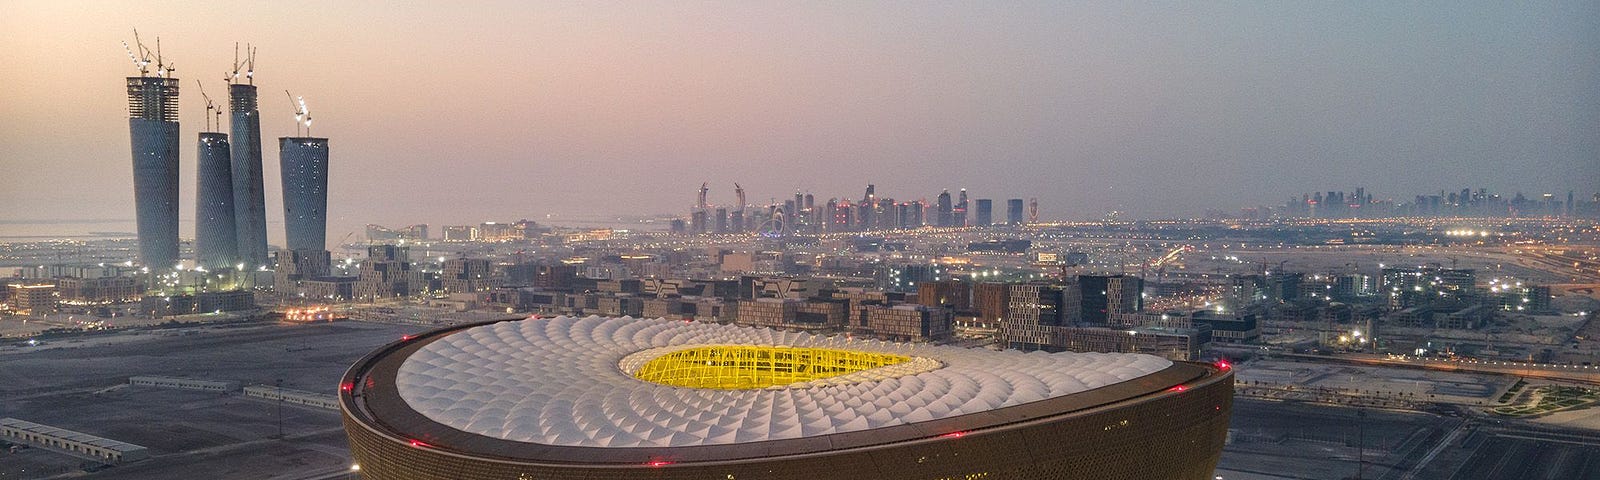 Air conditioned Football stadium in Qatar. Credits: CNN